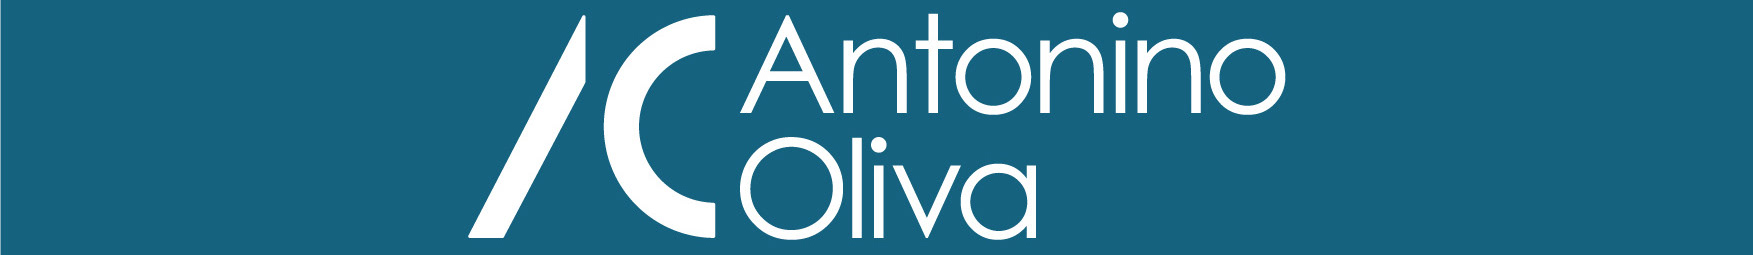 Antonino Oliva's profile banner